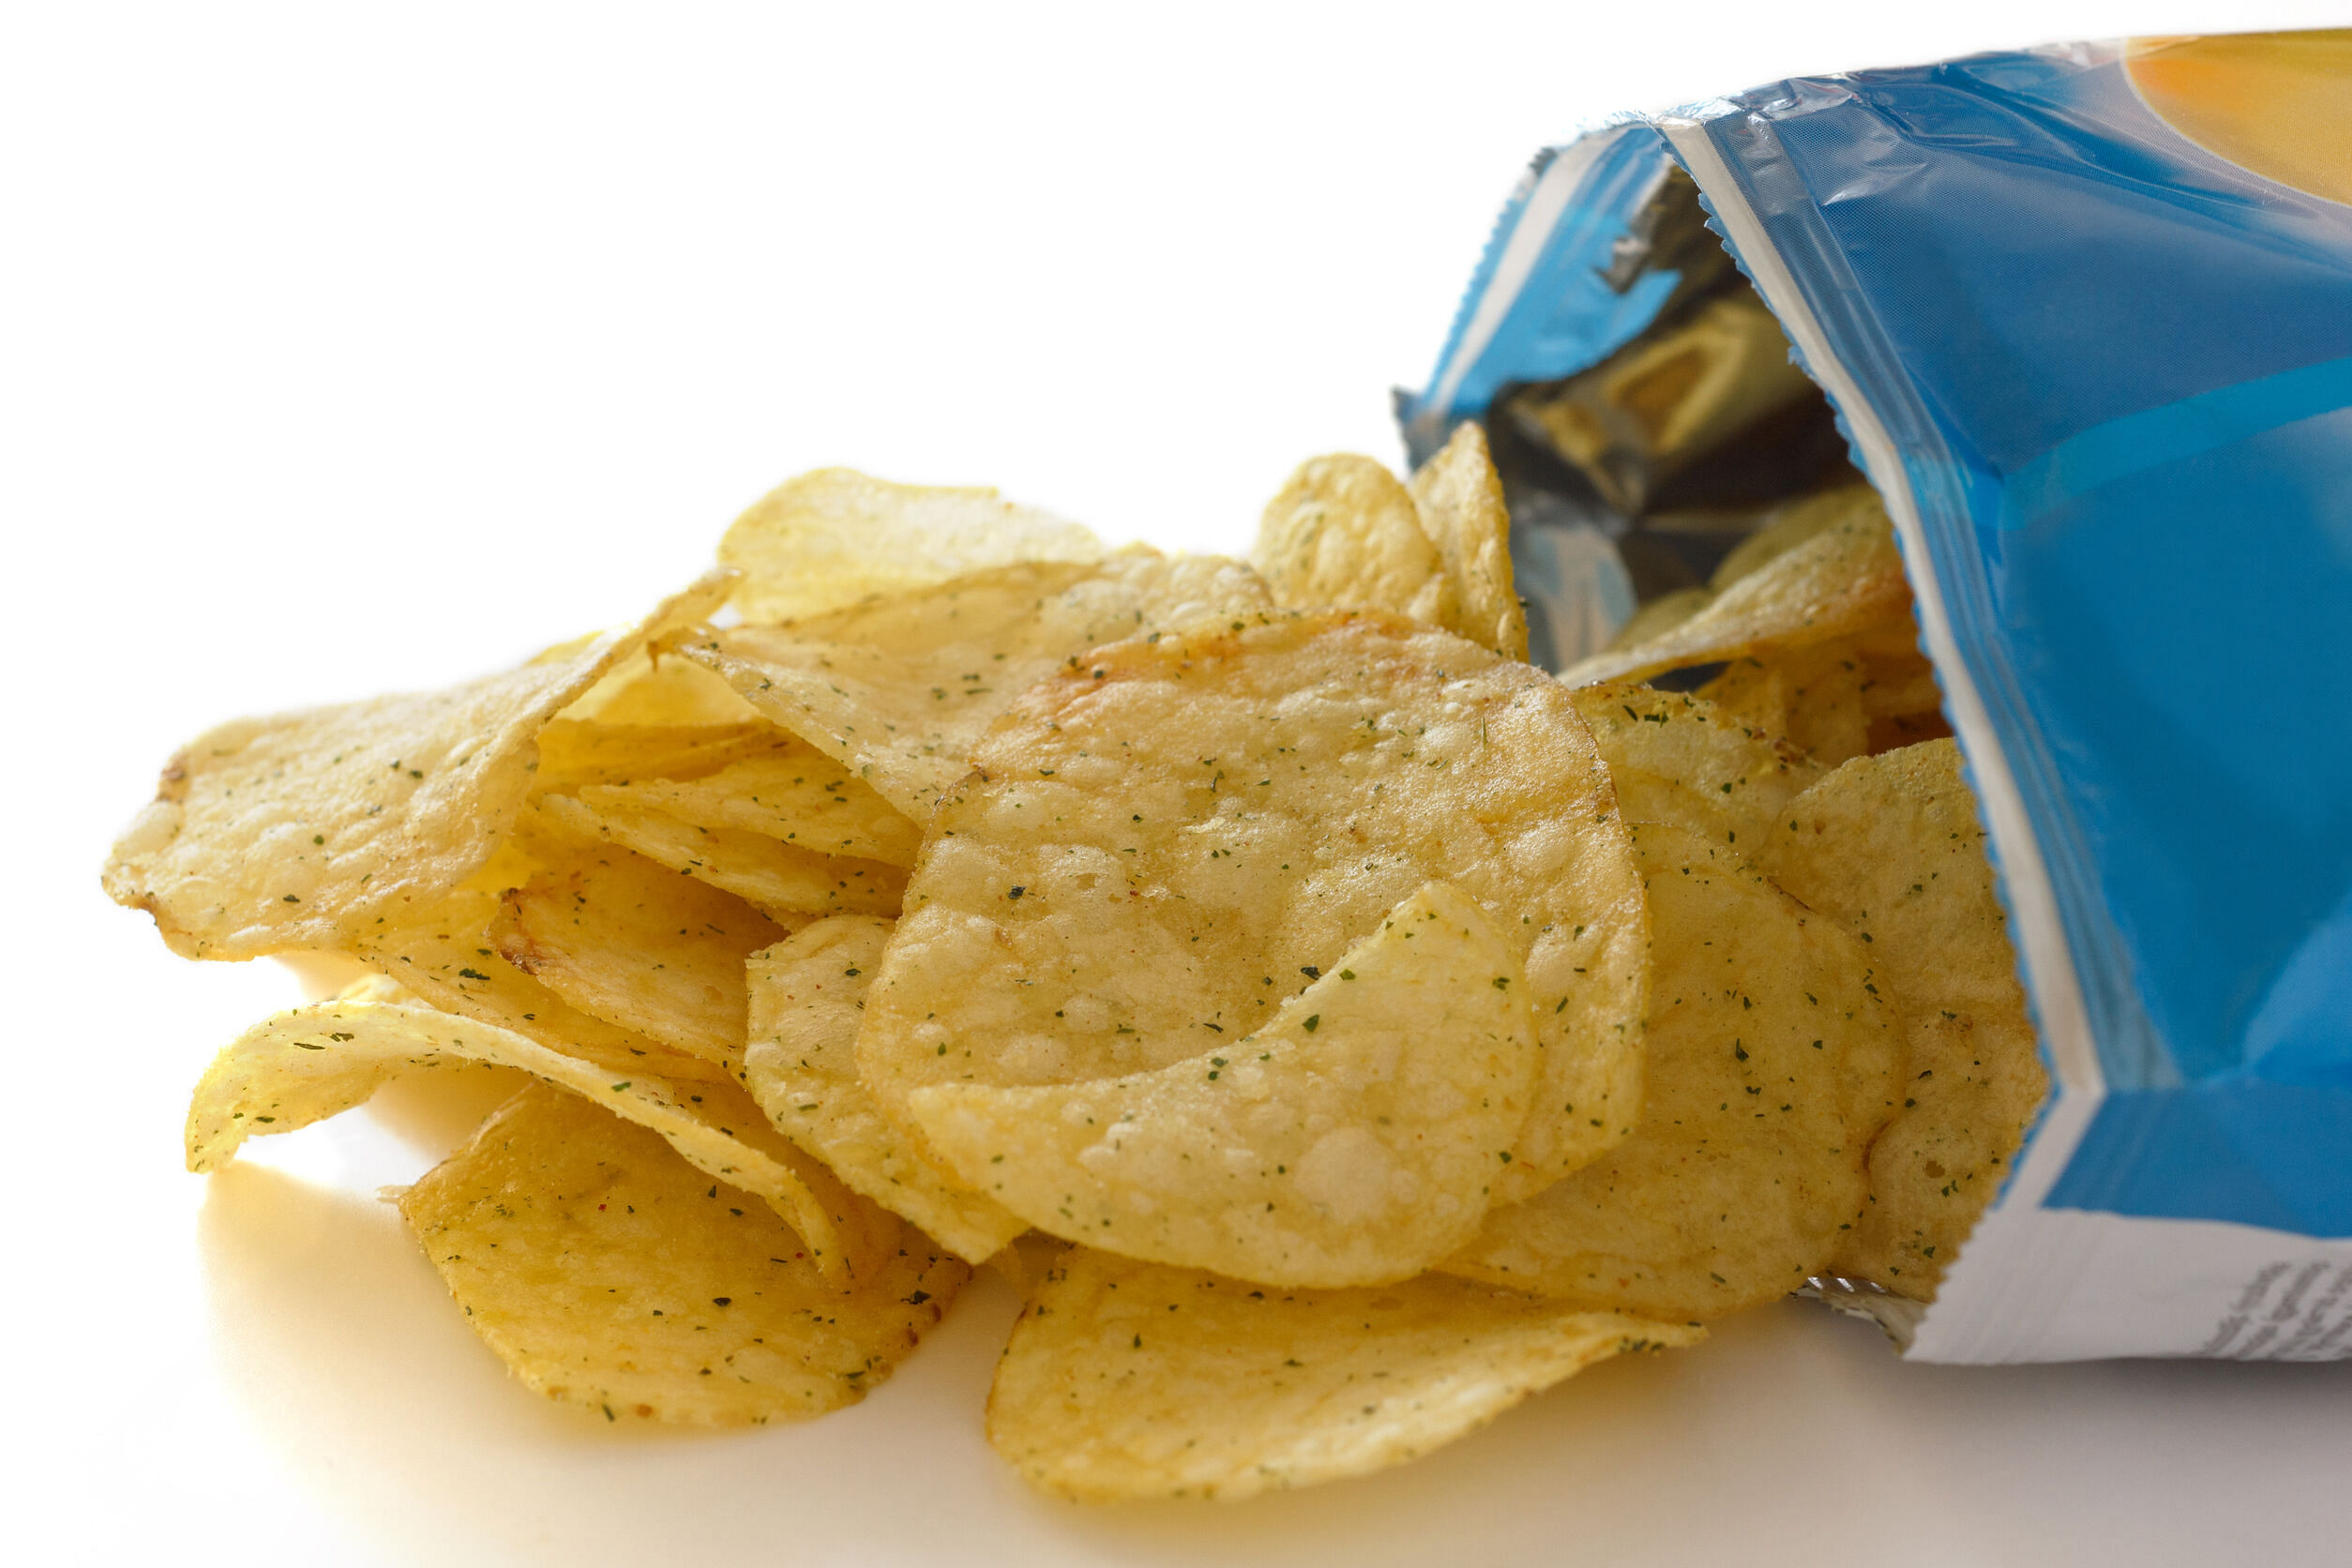 Costco Kirkland Signature Kettle Brand Potato Chips Review - Costcuisine